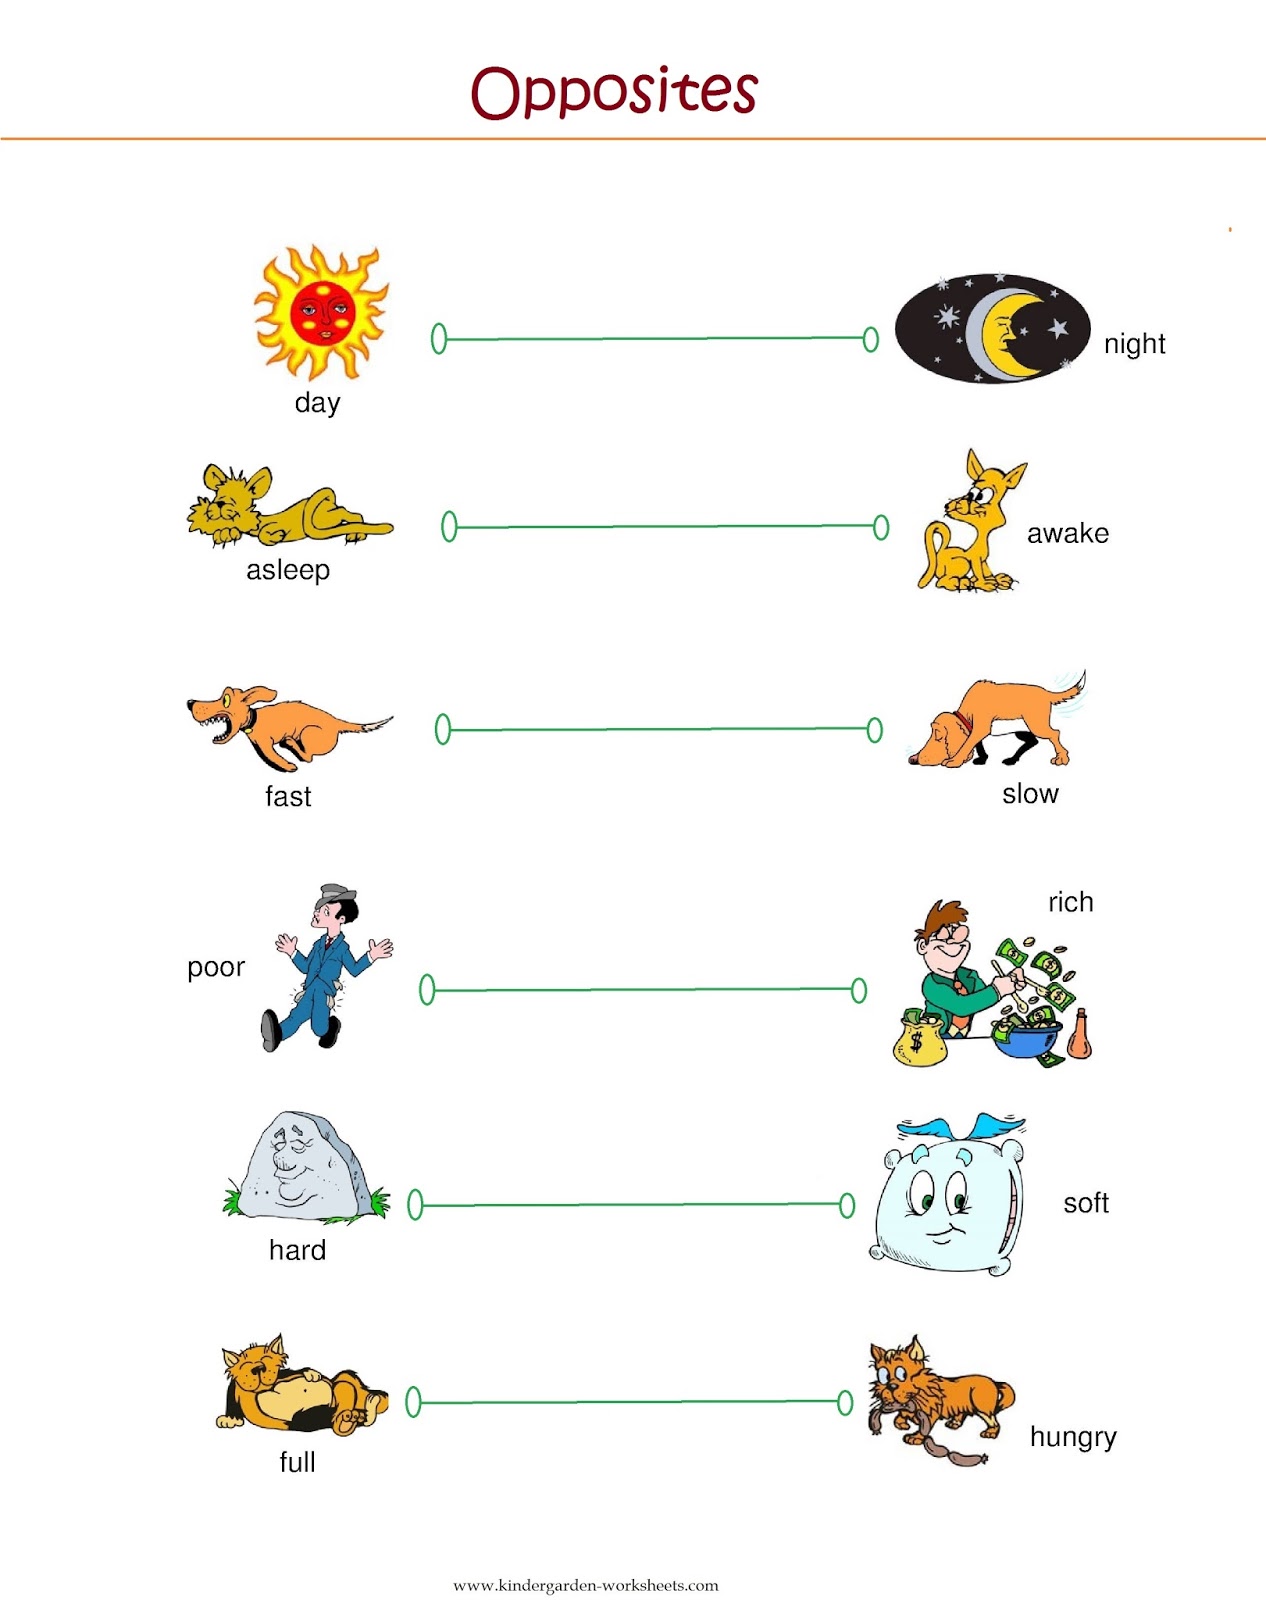 opposites-opposites-preschool-preschool-printables-kindergarten-opposites-worksheets-for